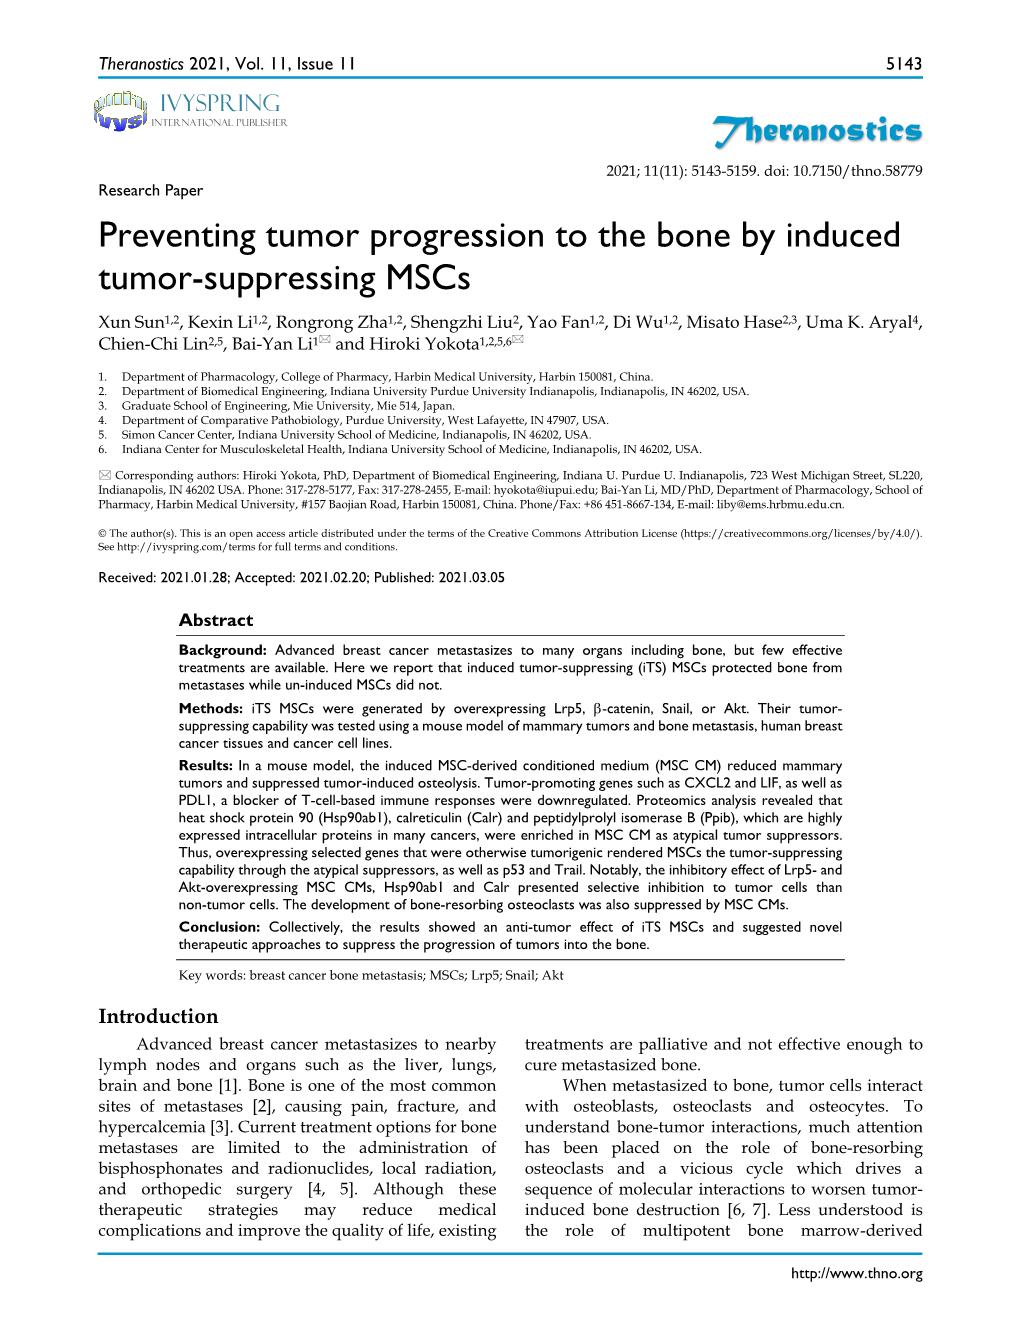 Theranostics Preventing Tumor Progression to the Bone by Induced